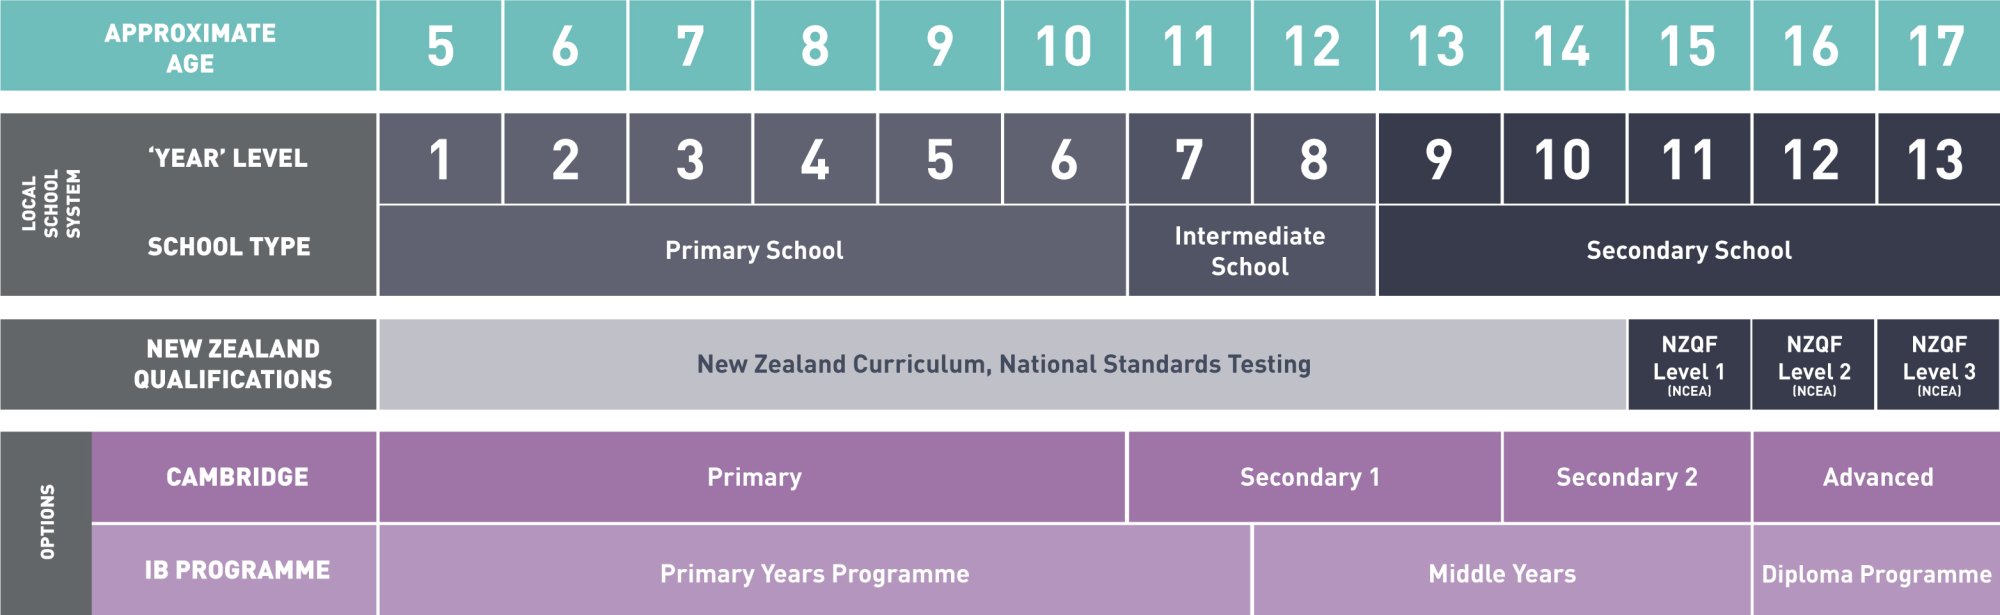 NZ_Education_School-pathway_Diagram-1.jpg